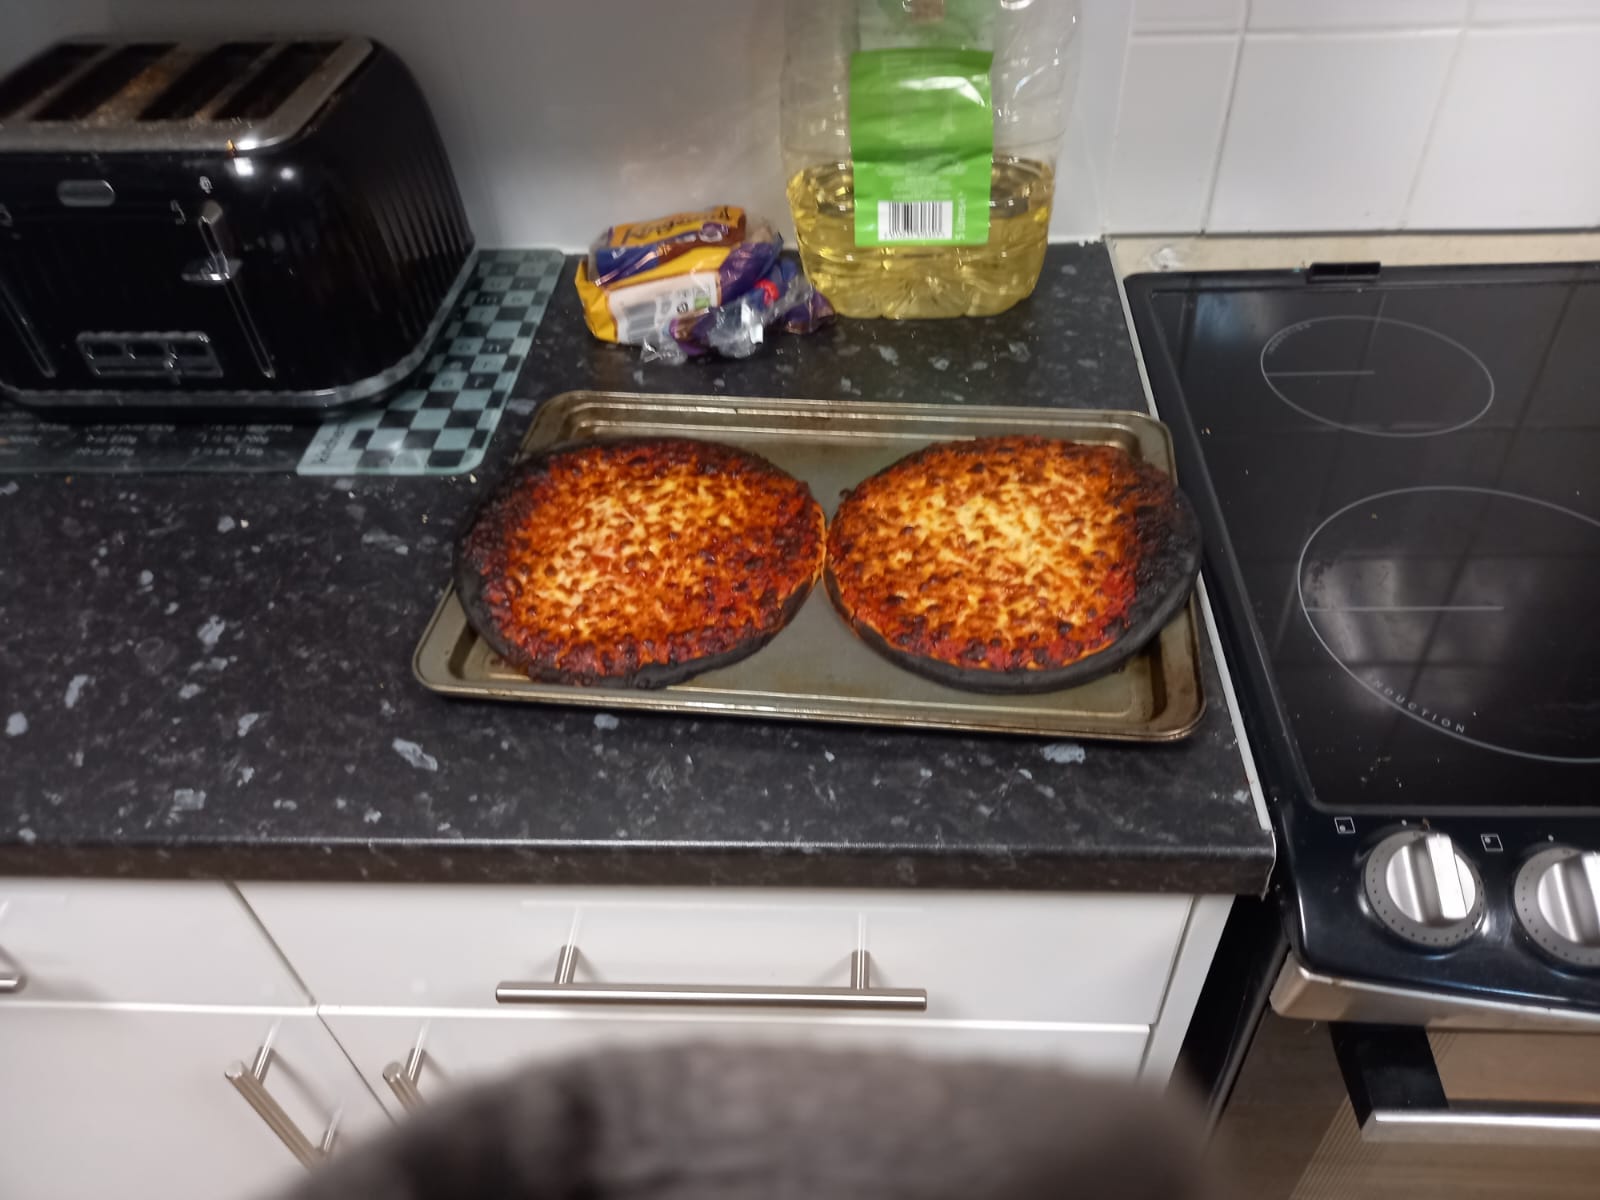 Burnt pizzas